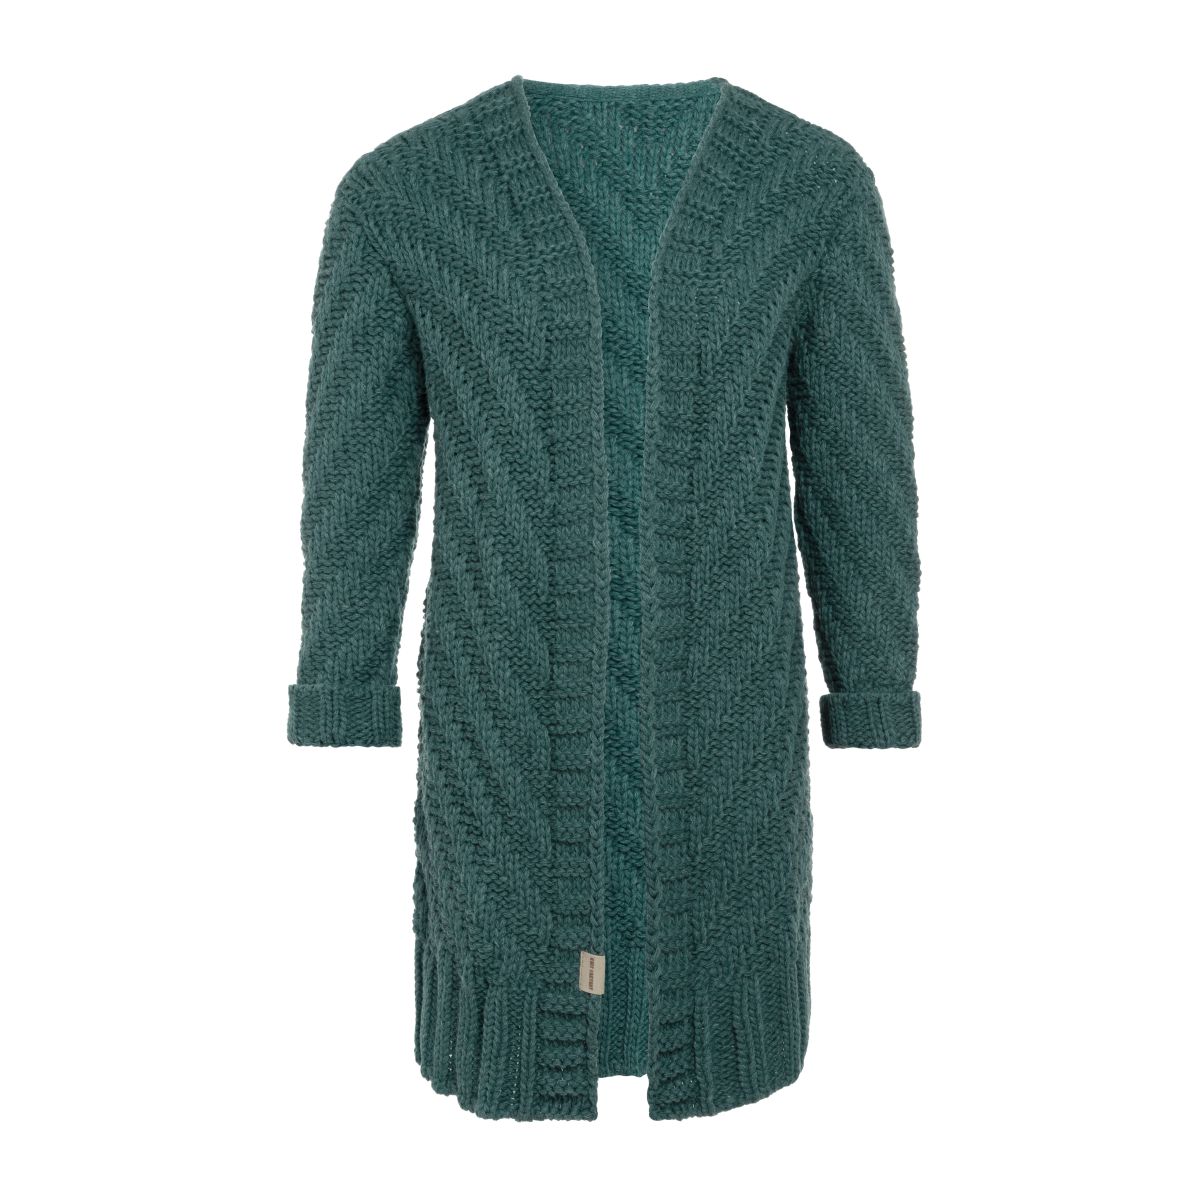 sally knitted cardigan laurel 4042